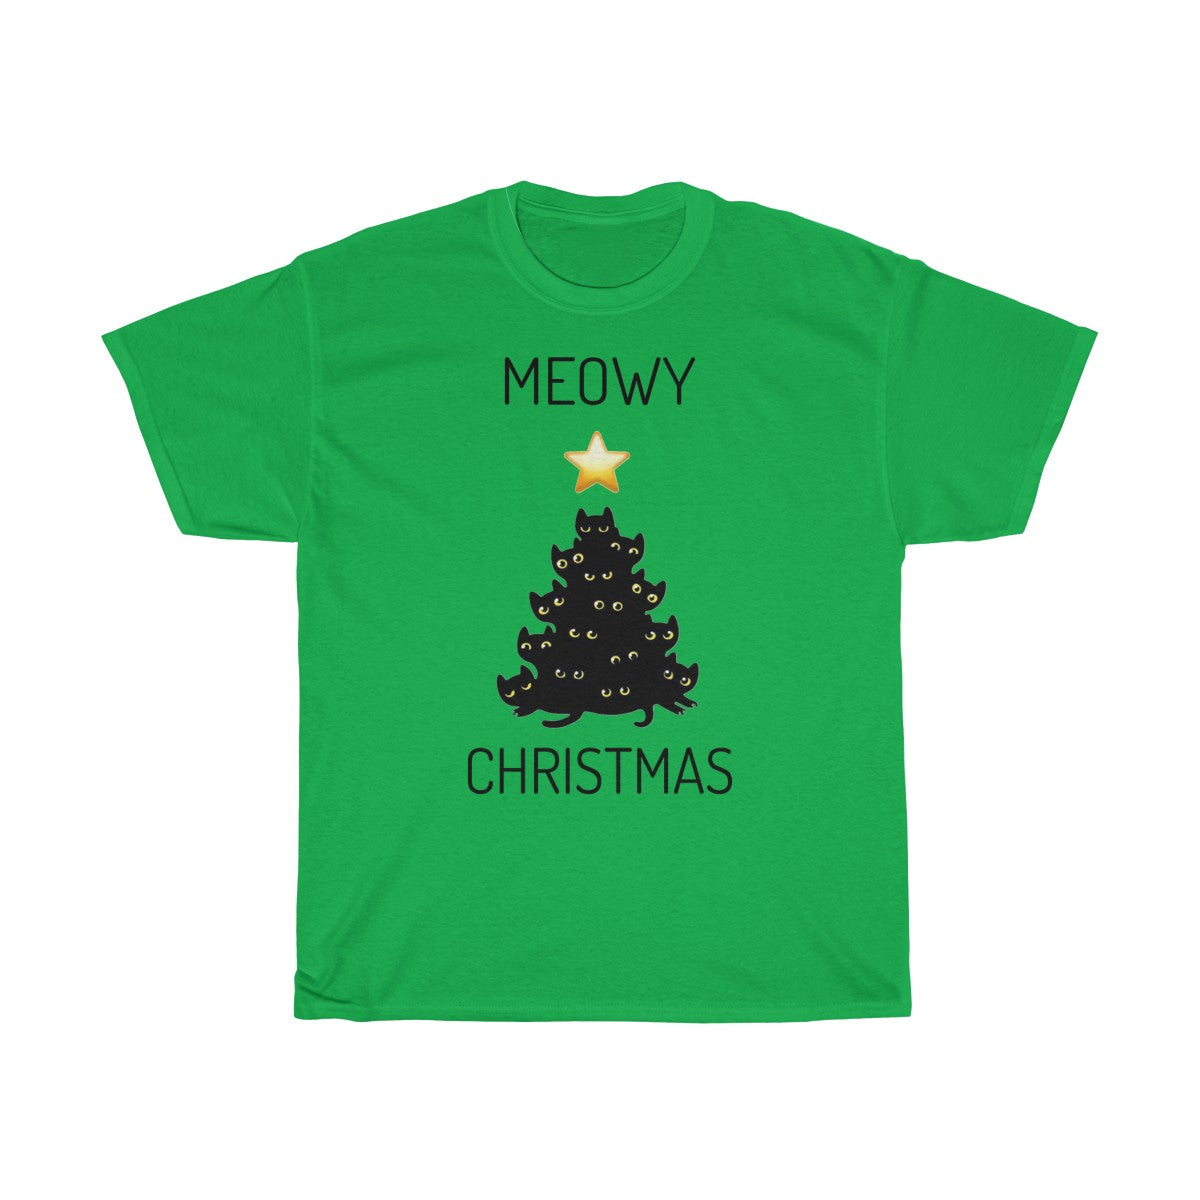 SquishBeans Meowy Christmas T-Shirt